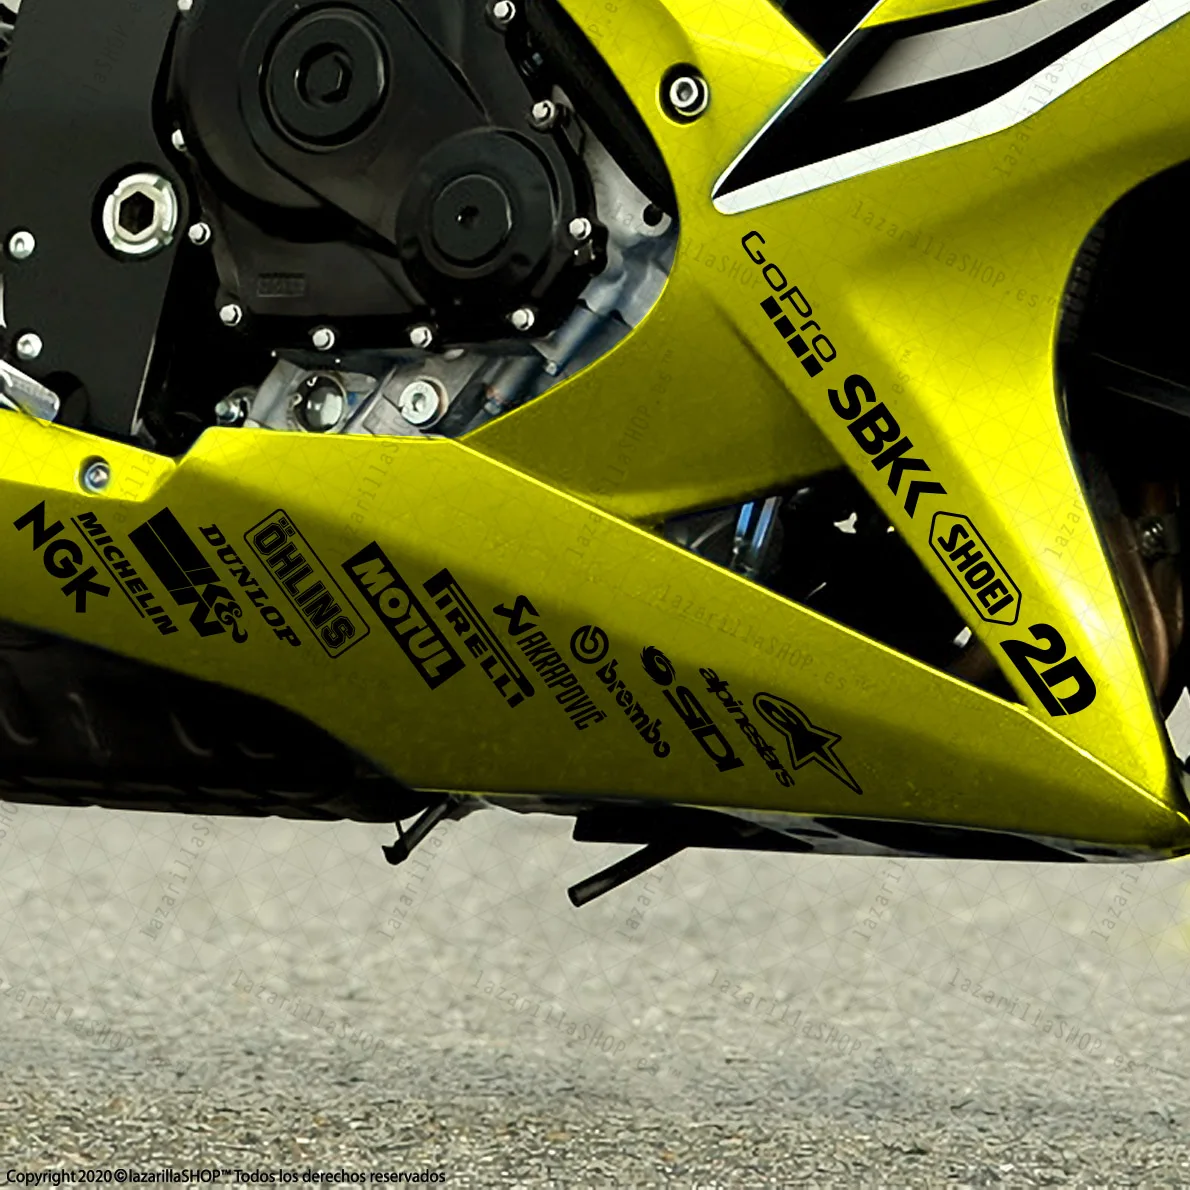 Stickers Sponsors Moto Racing  Motorcycle Sponsors Stickers - Kit16a Stickers  Moto - Aliexpress